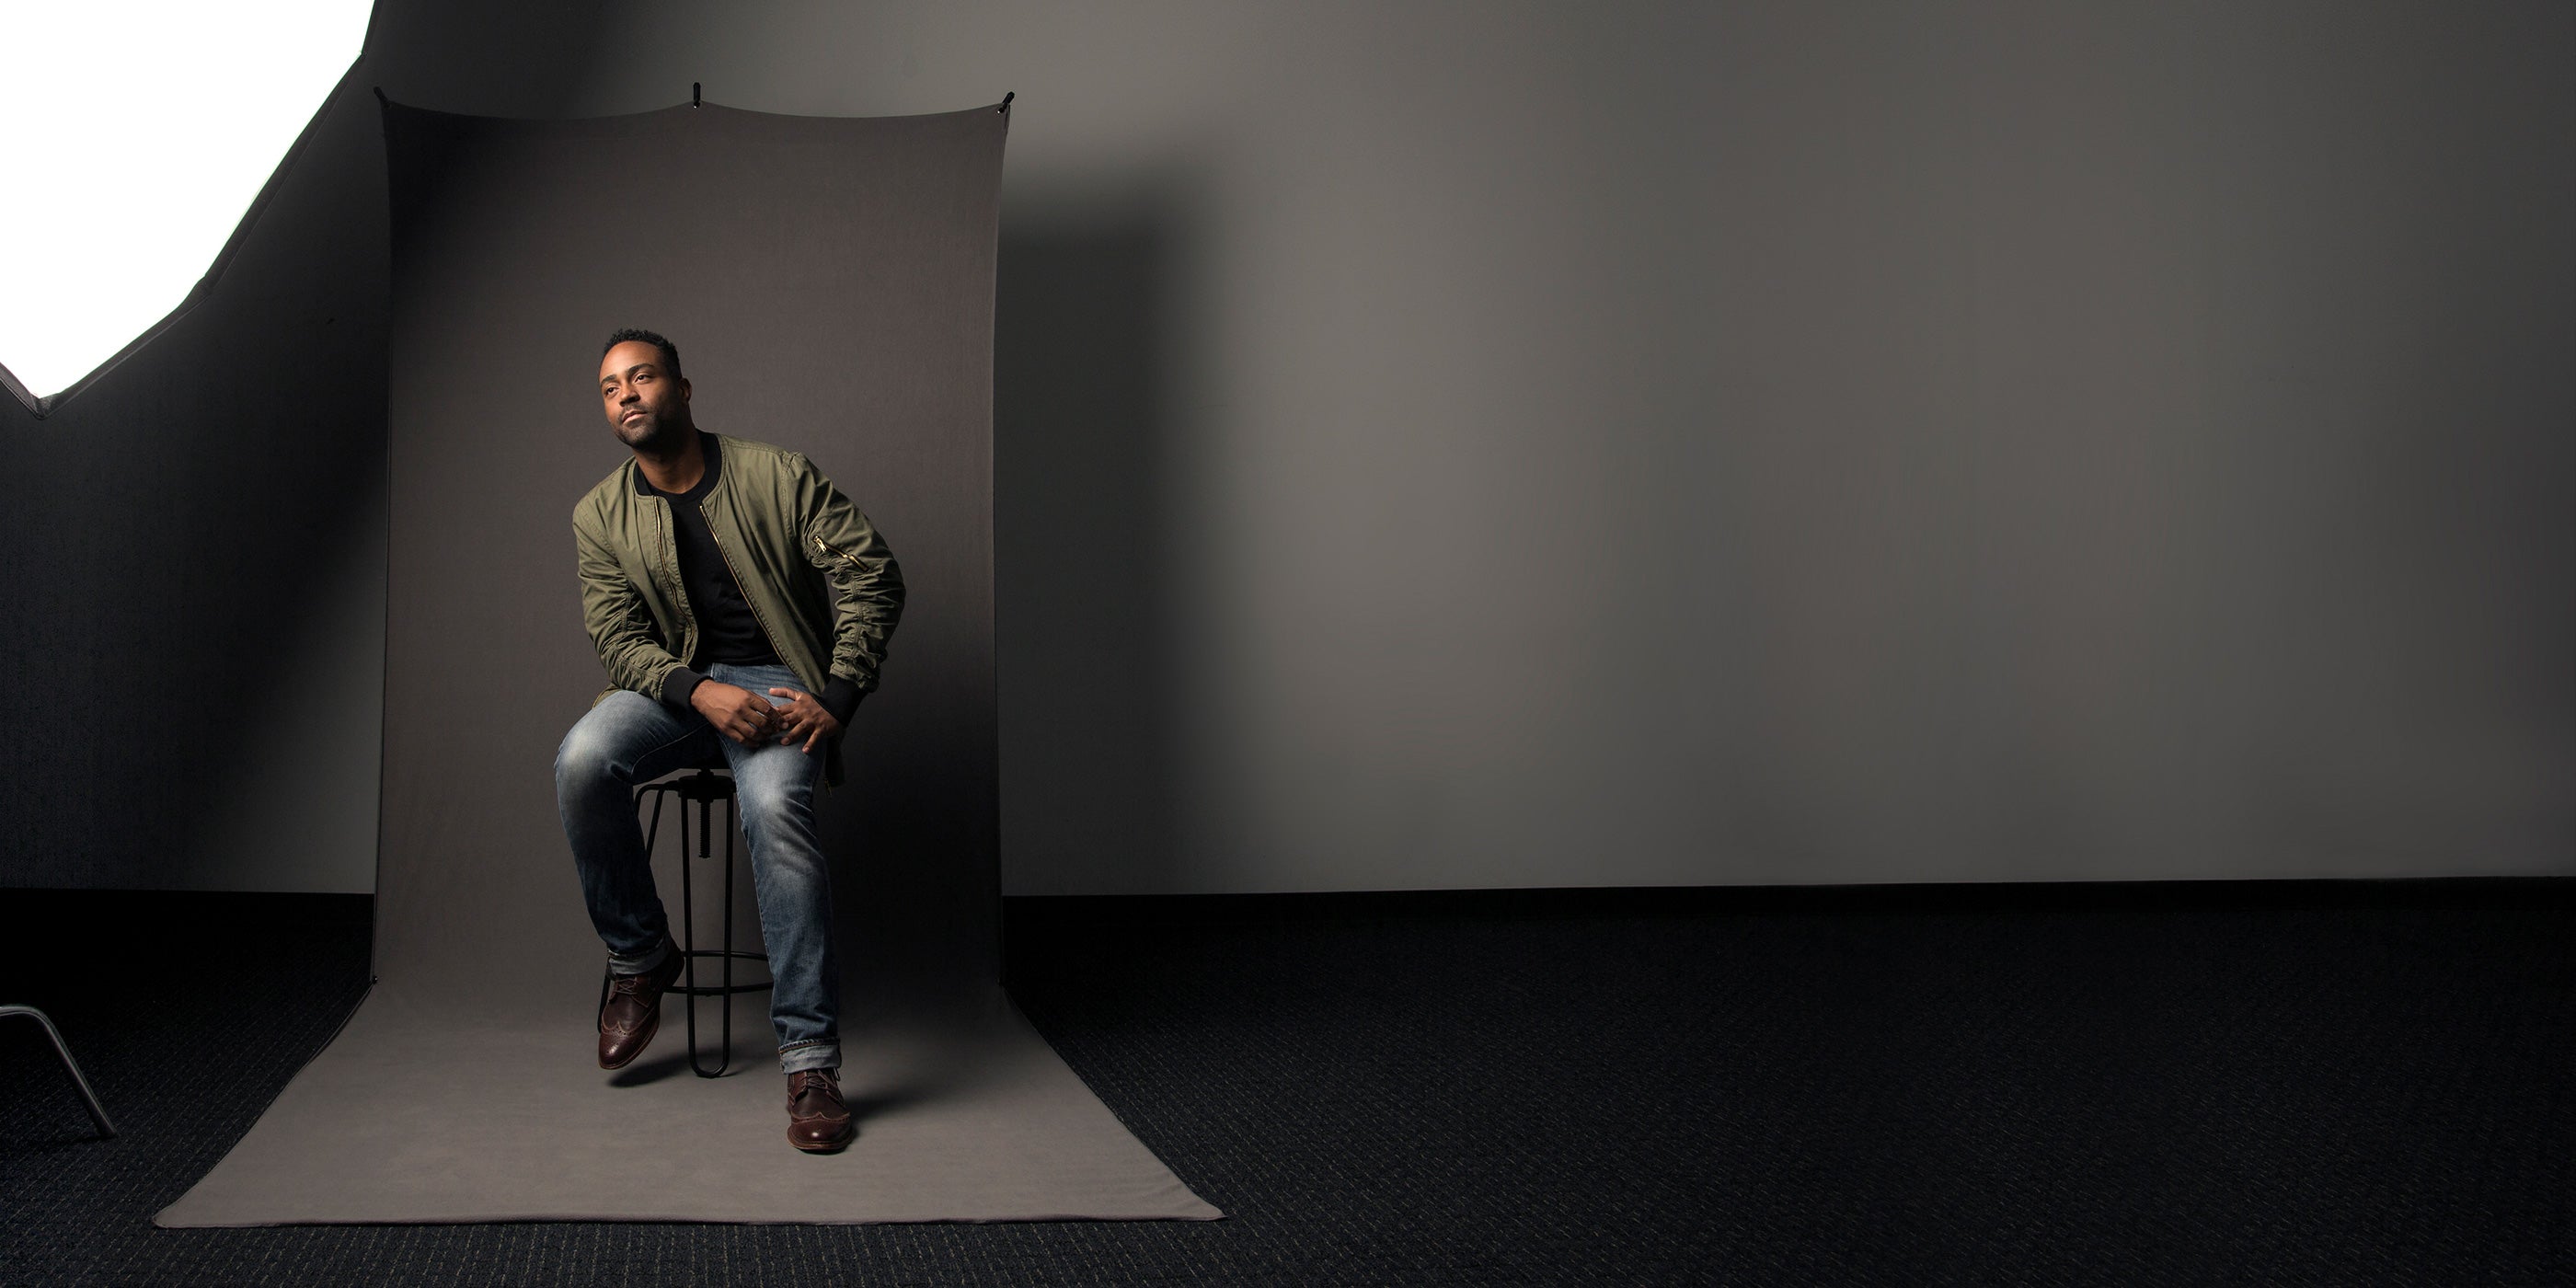 Portable photo studio X-Drop backdrop for full-length portrait